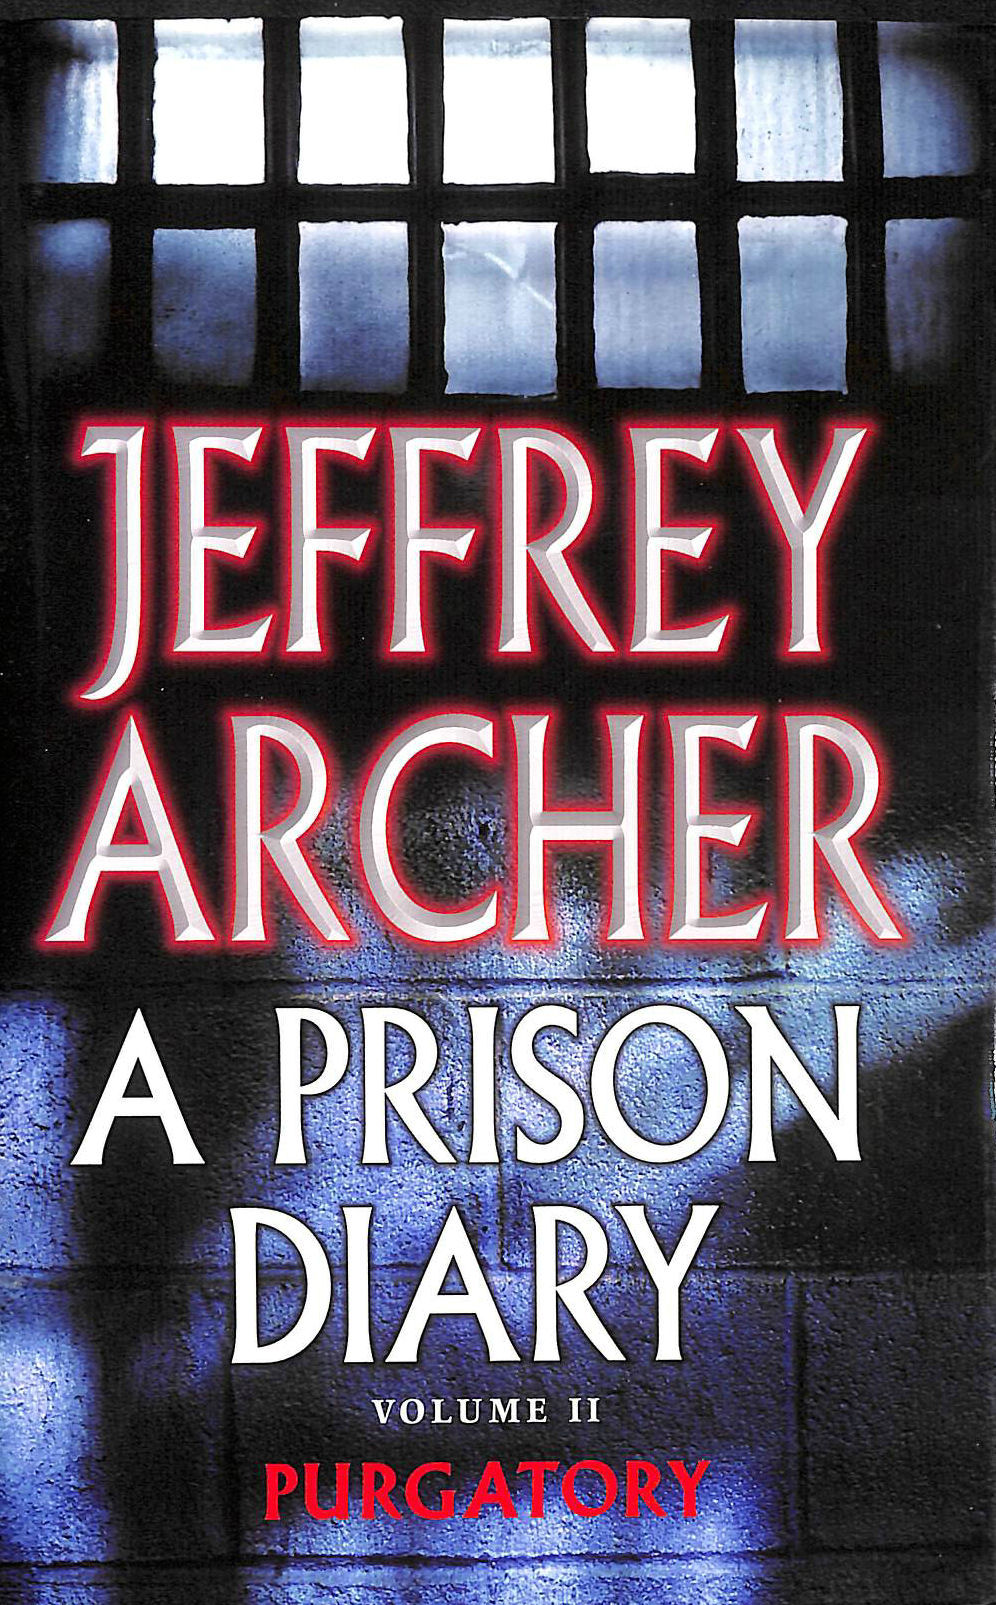 JEFFREY ARCHER - Prison Diary: Volume 2 - Purgatory